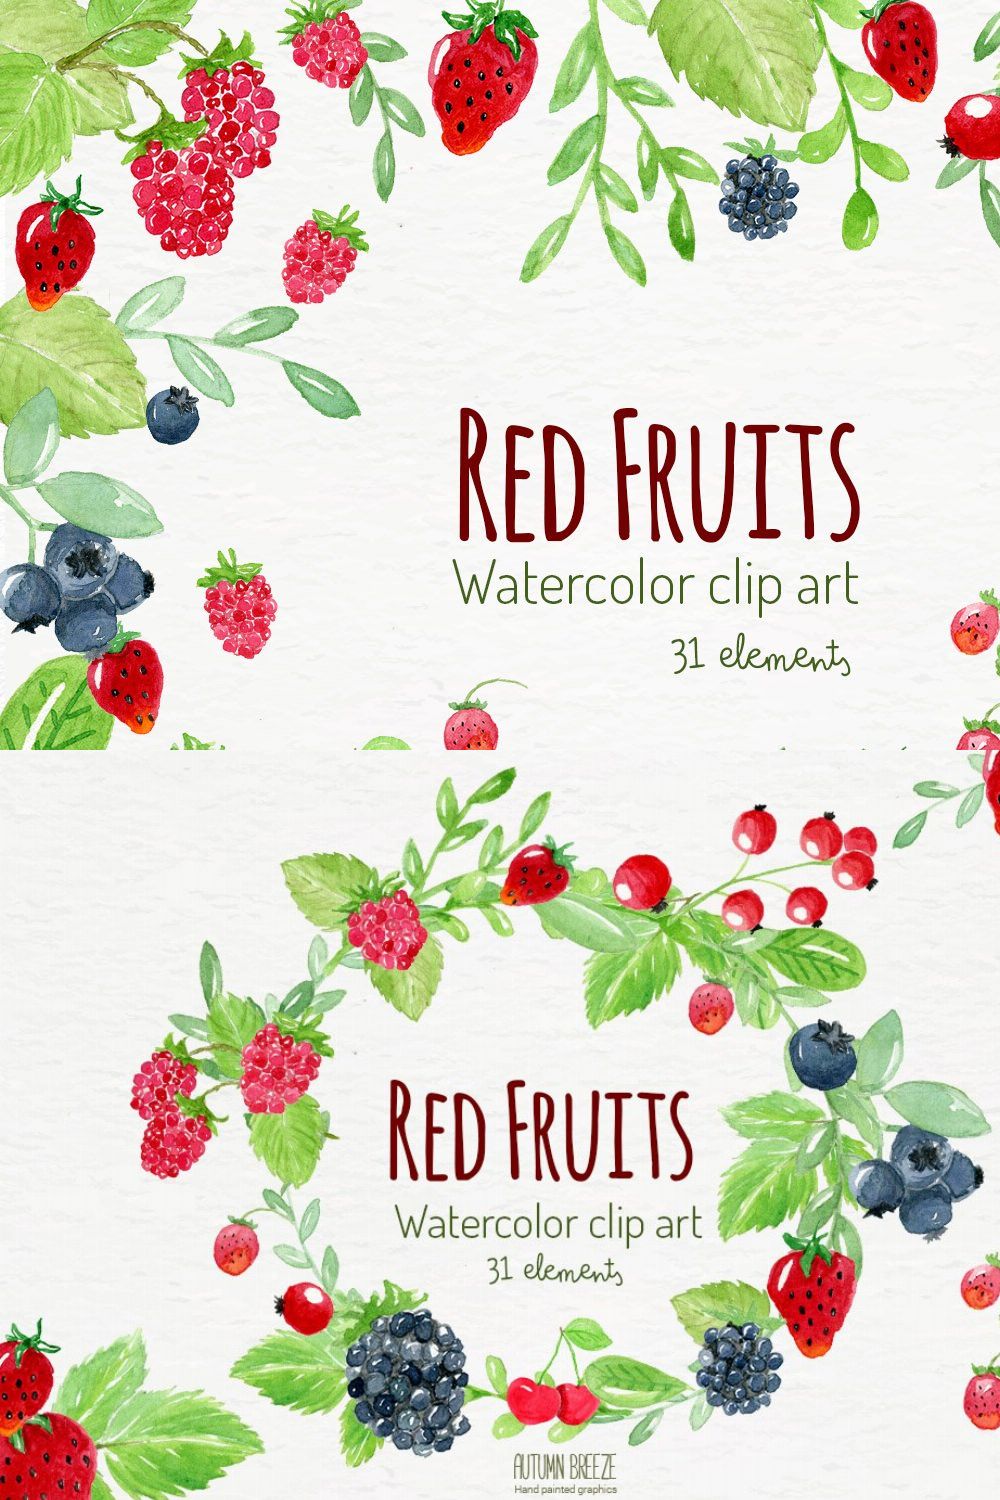 Watercolor fruits clipart pinterest preview image.